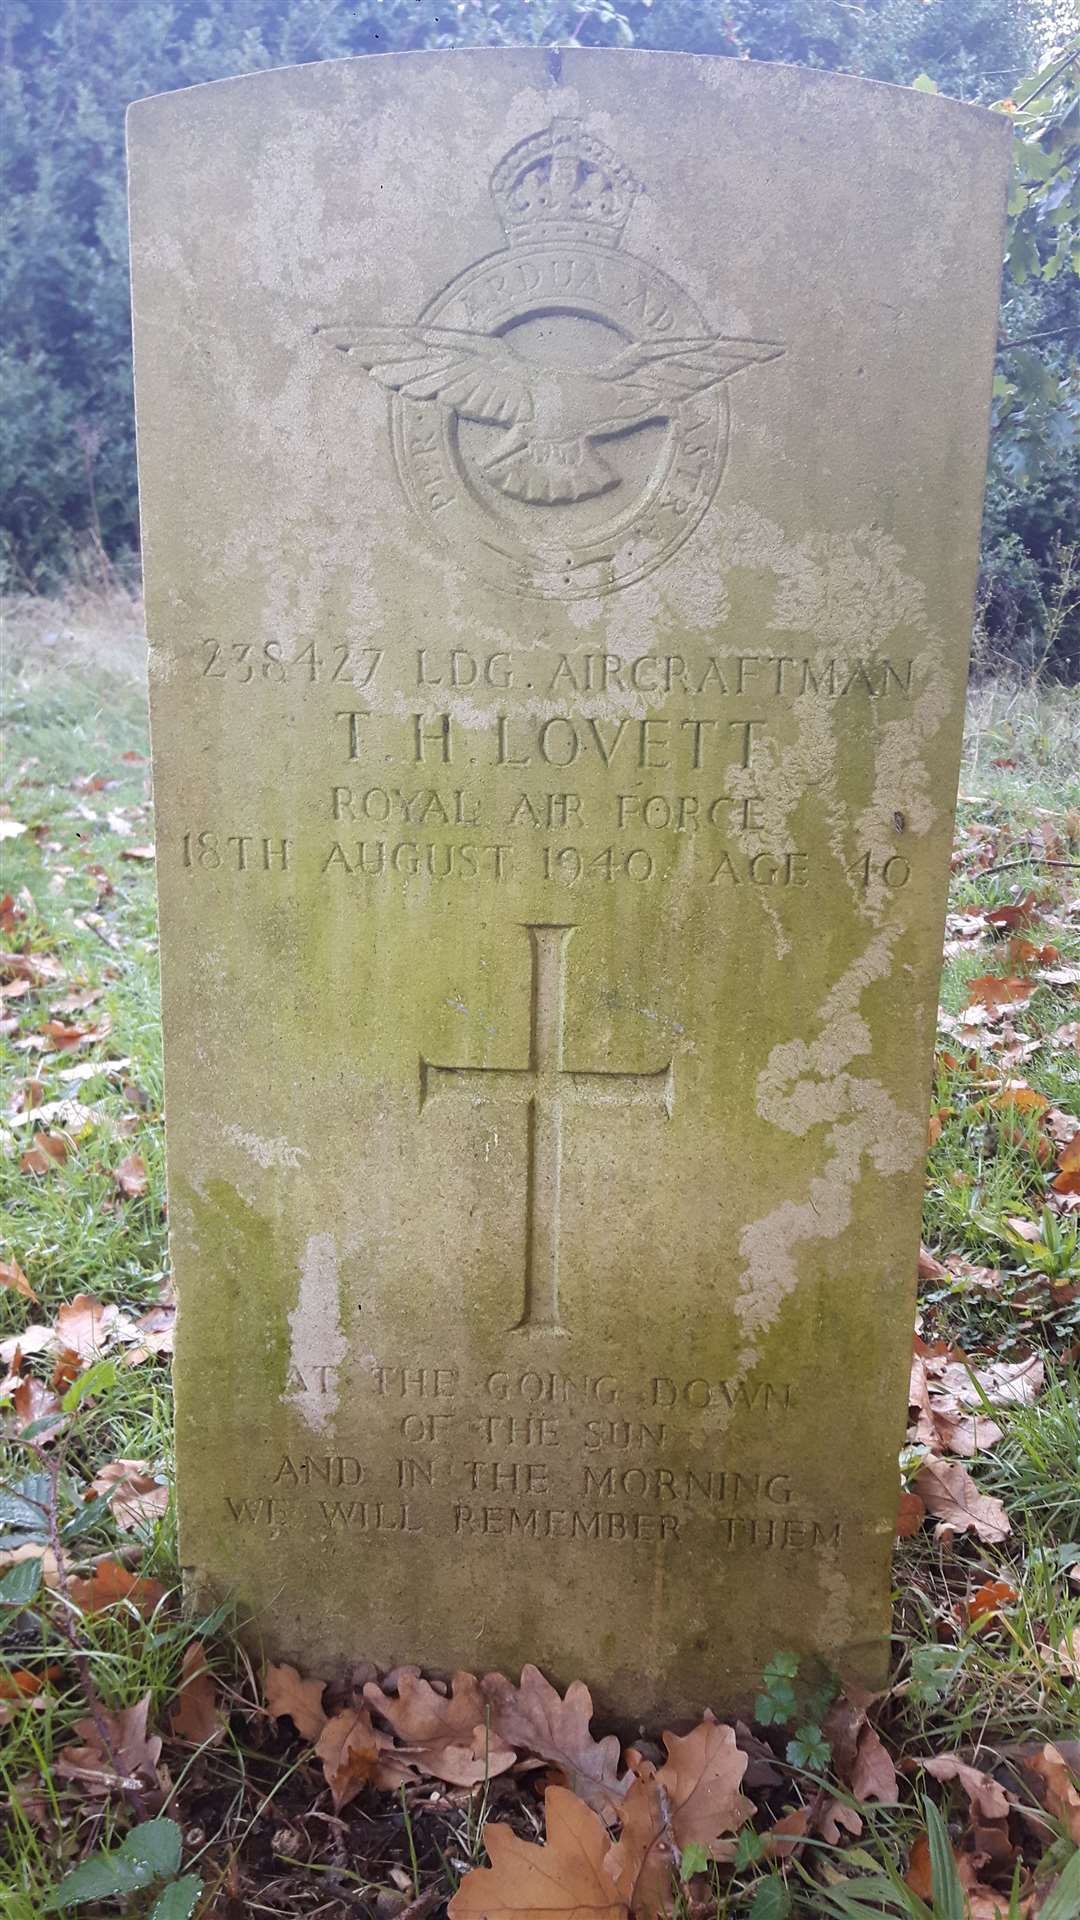 The gravestone of Leading Aircraftman Thomas Lovett in the cemetery at Barming Asylum